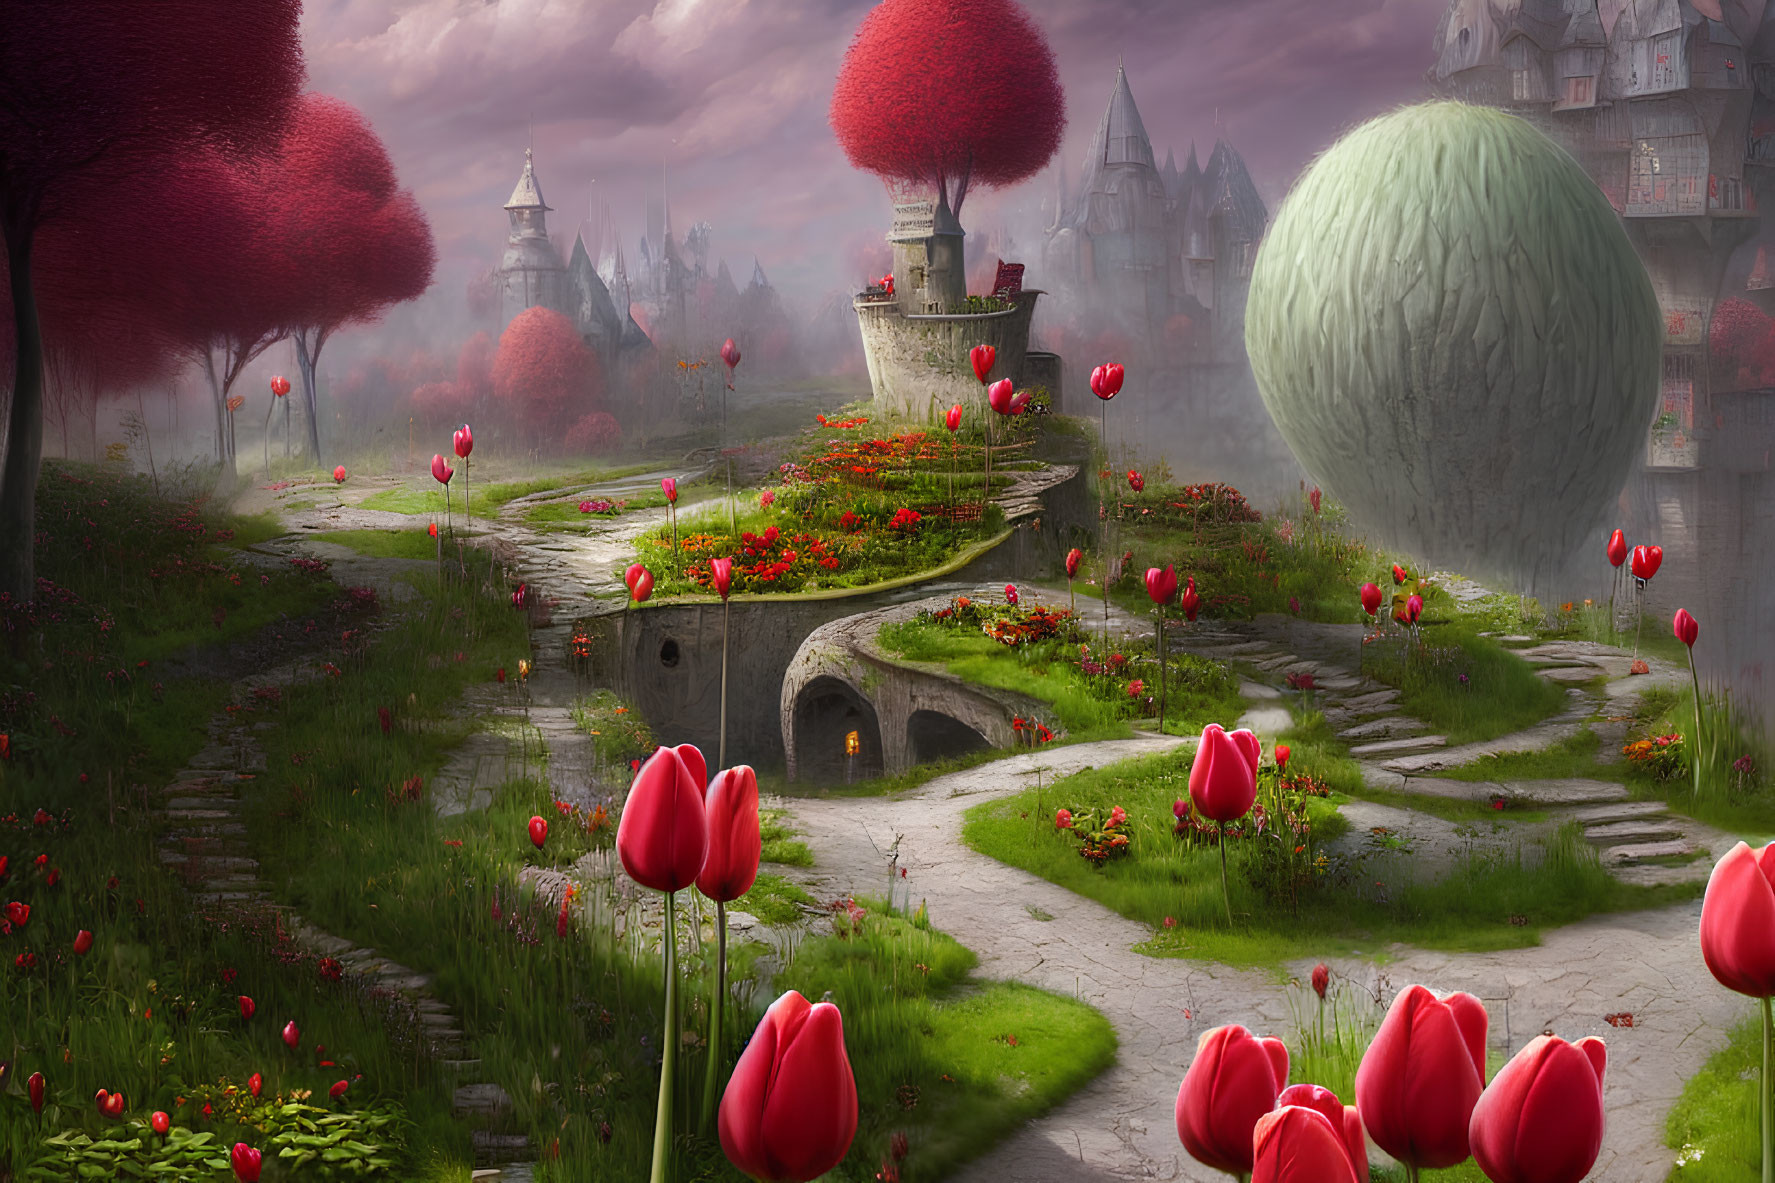 Vibrant red tulips, mushroom-shaped trees, stone bridge, and castle in fantasy landscape